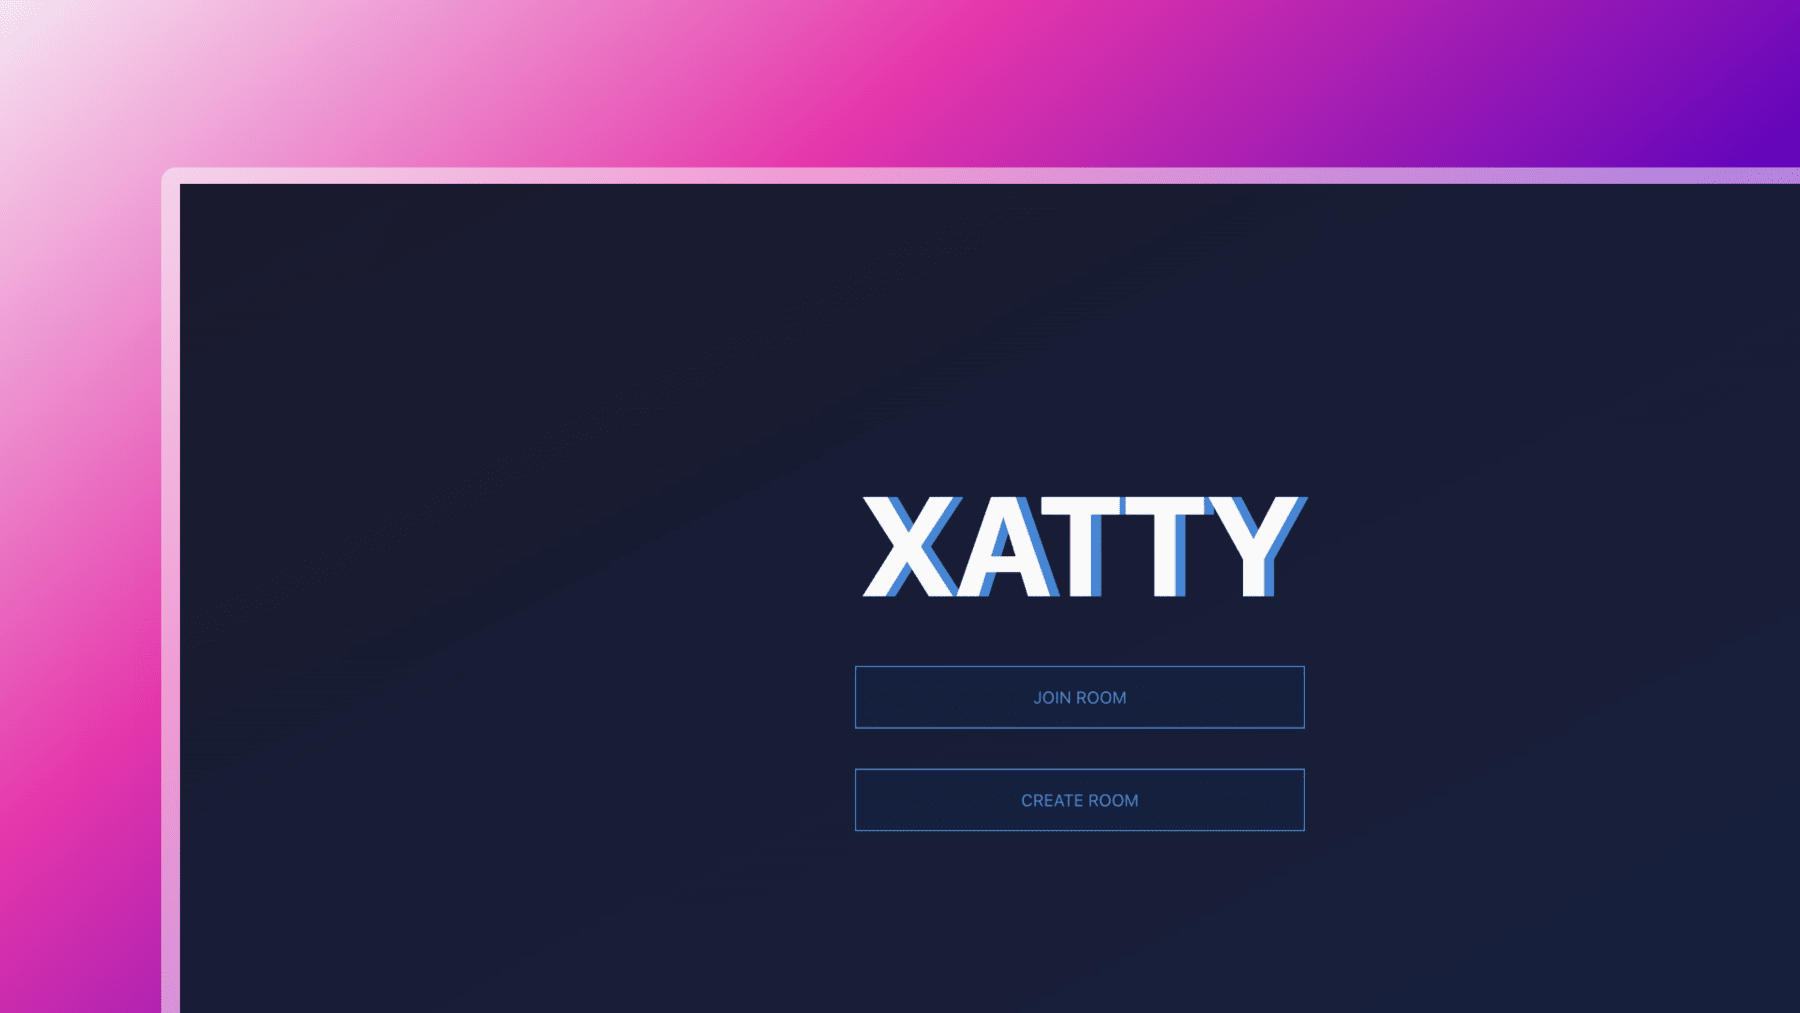 XATTY's 1 screenshot